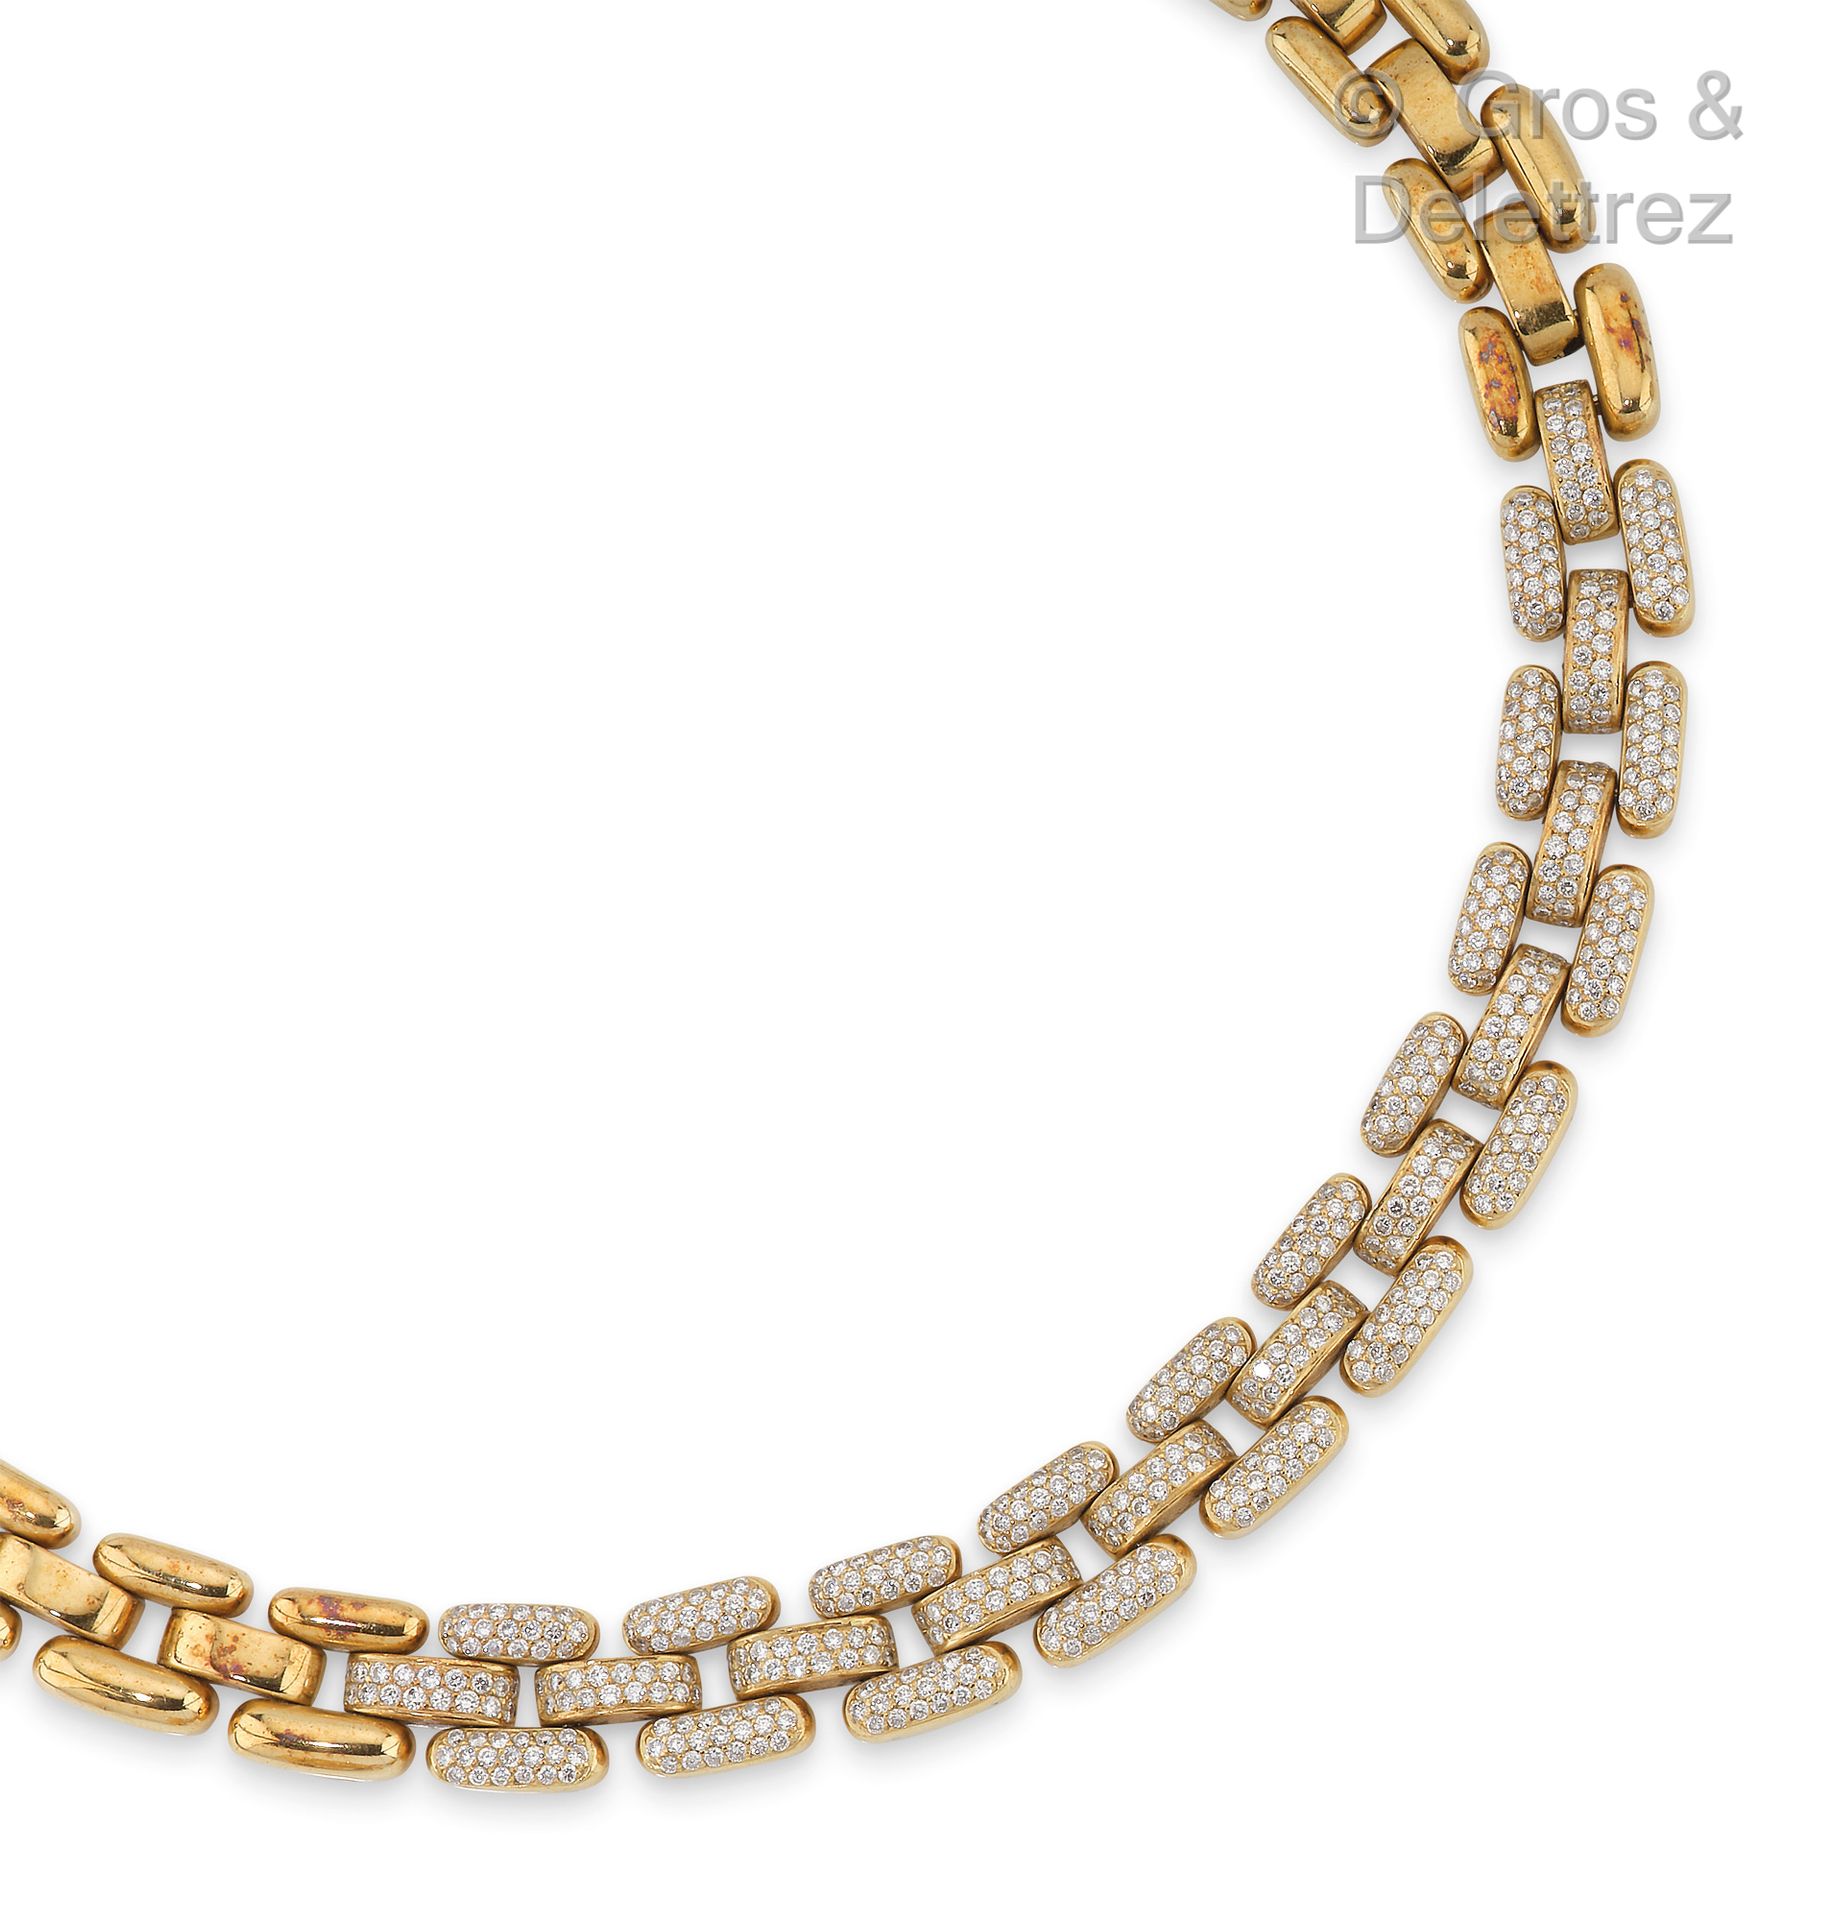 Null 重要的铰链式黄金项链，由三排宝石组成，中间的宝石镶嵌着明亮式切割钻石。长度：46厘米。毛重：180.8克。